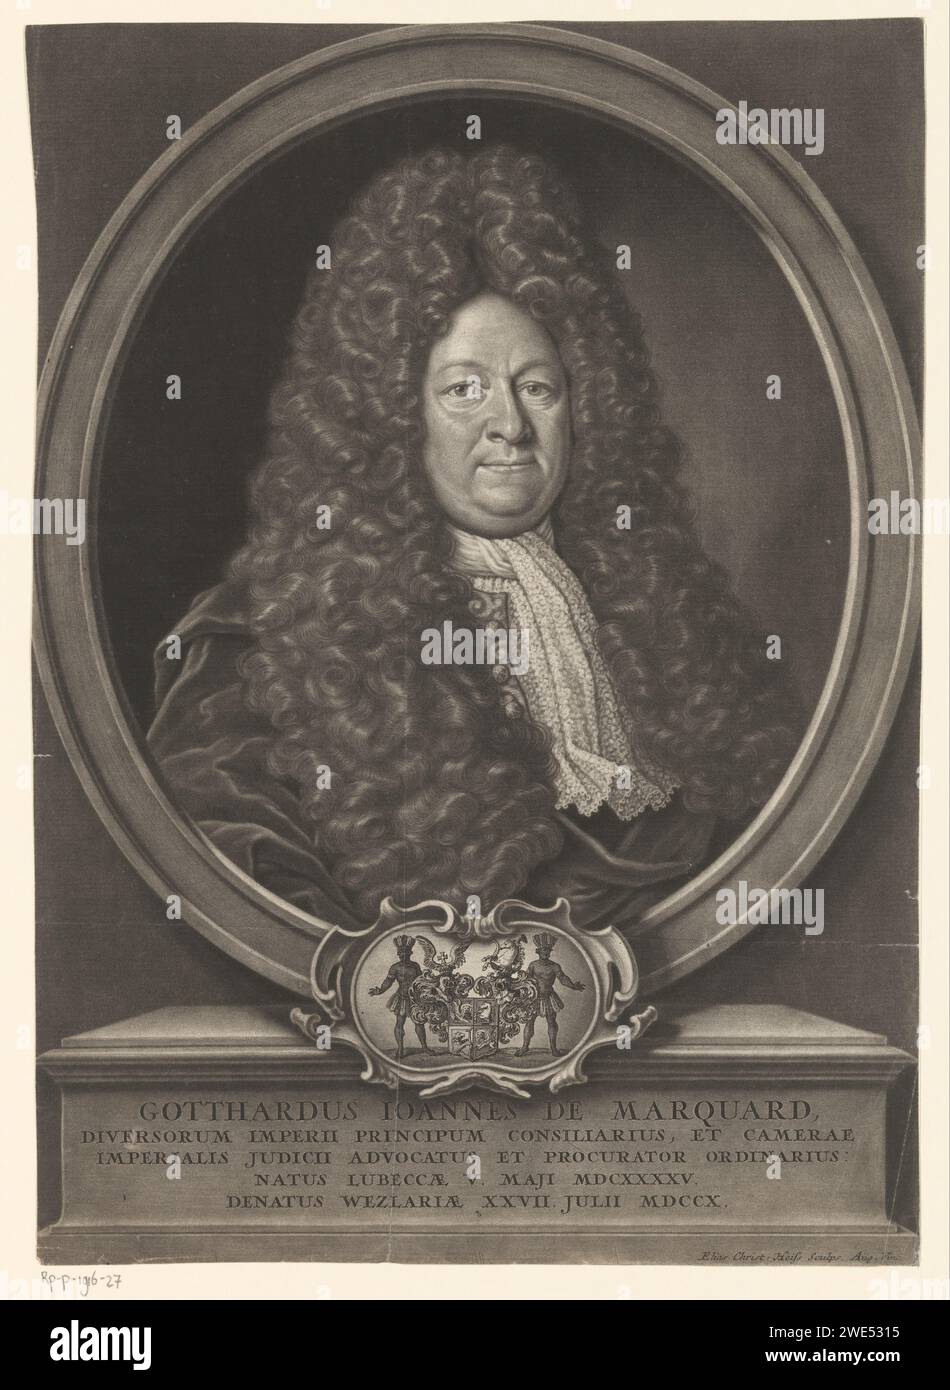 PortraT van Gotthard Johann von Marquard, Elias Christopf Heiss, 1710 - 1731 stampa Augsburg paper Historical Persons. cuscinetto araldico Foto Stock